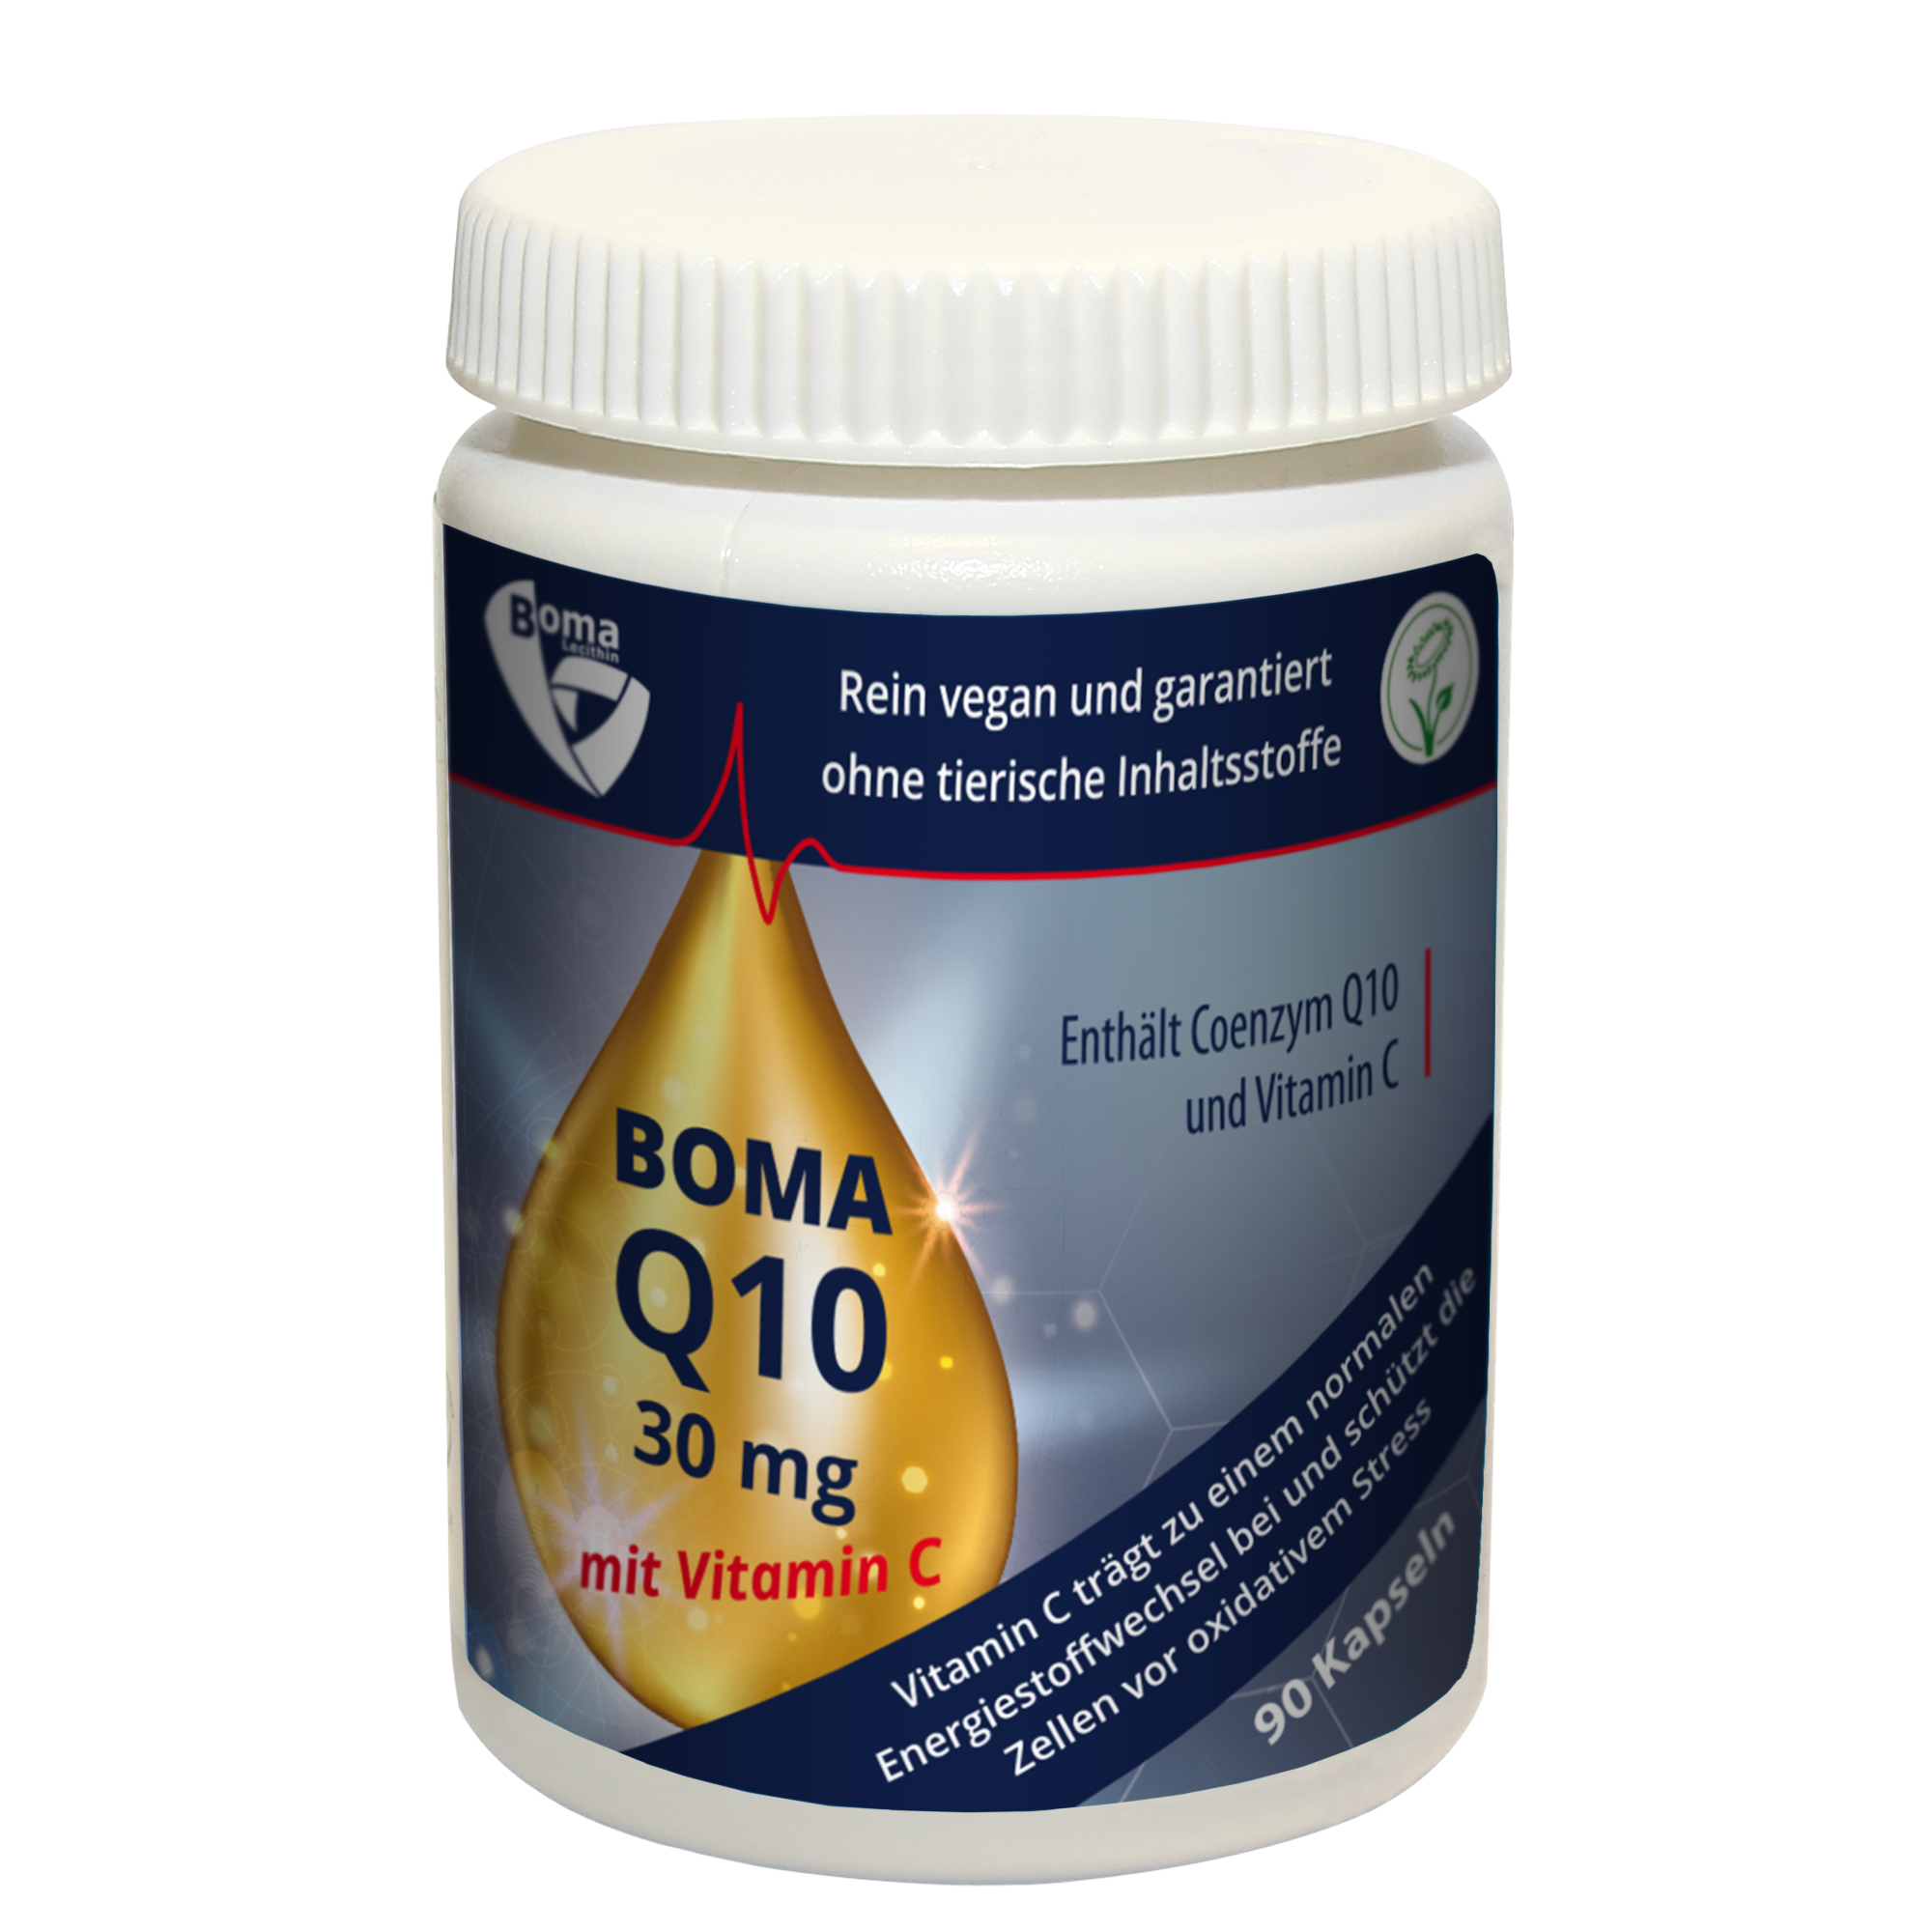 Boma Coenzym Q10 Ubichinol 30 mg Kapseln